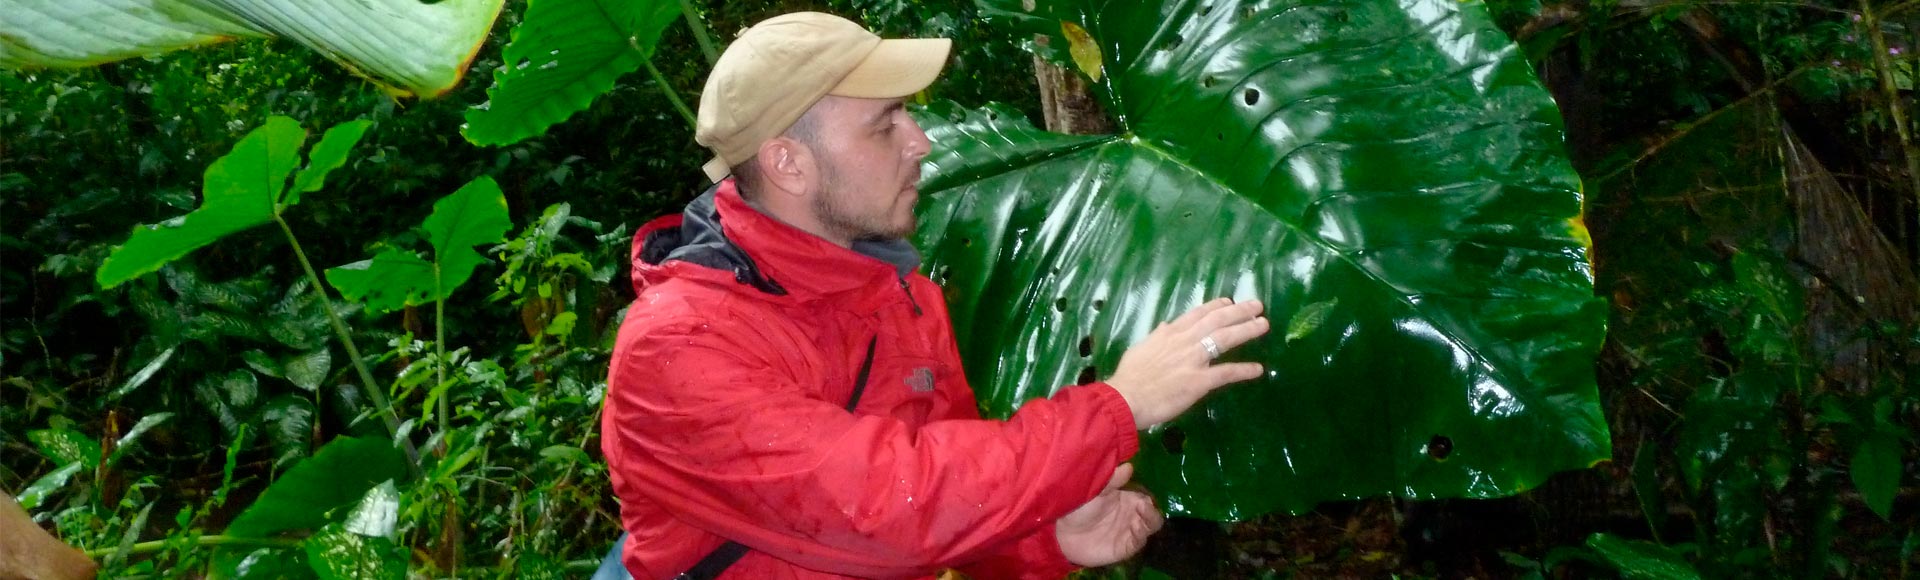 investigacion botanica colombia selva chicaque